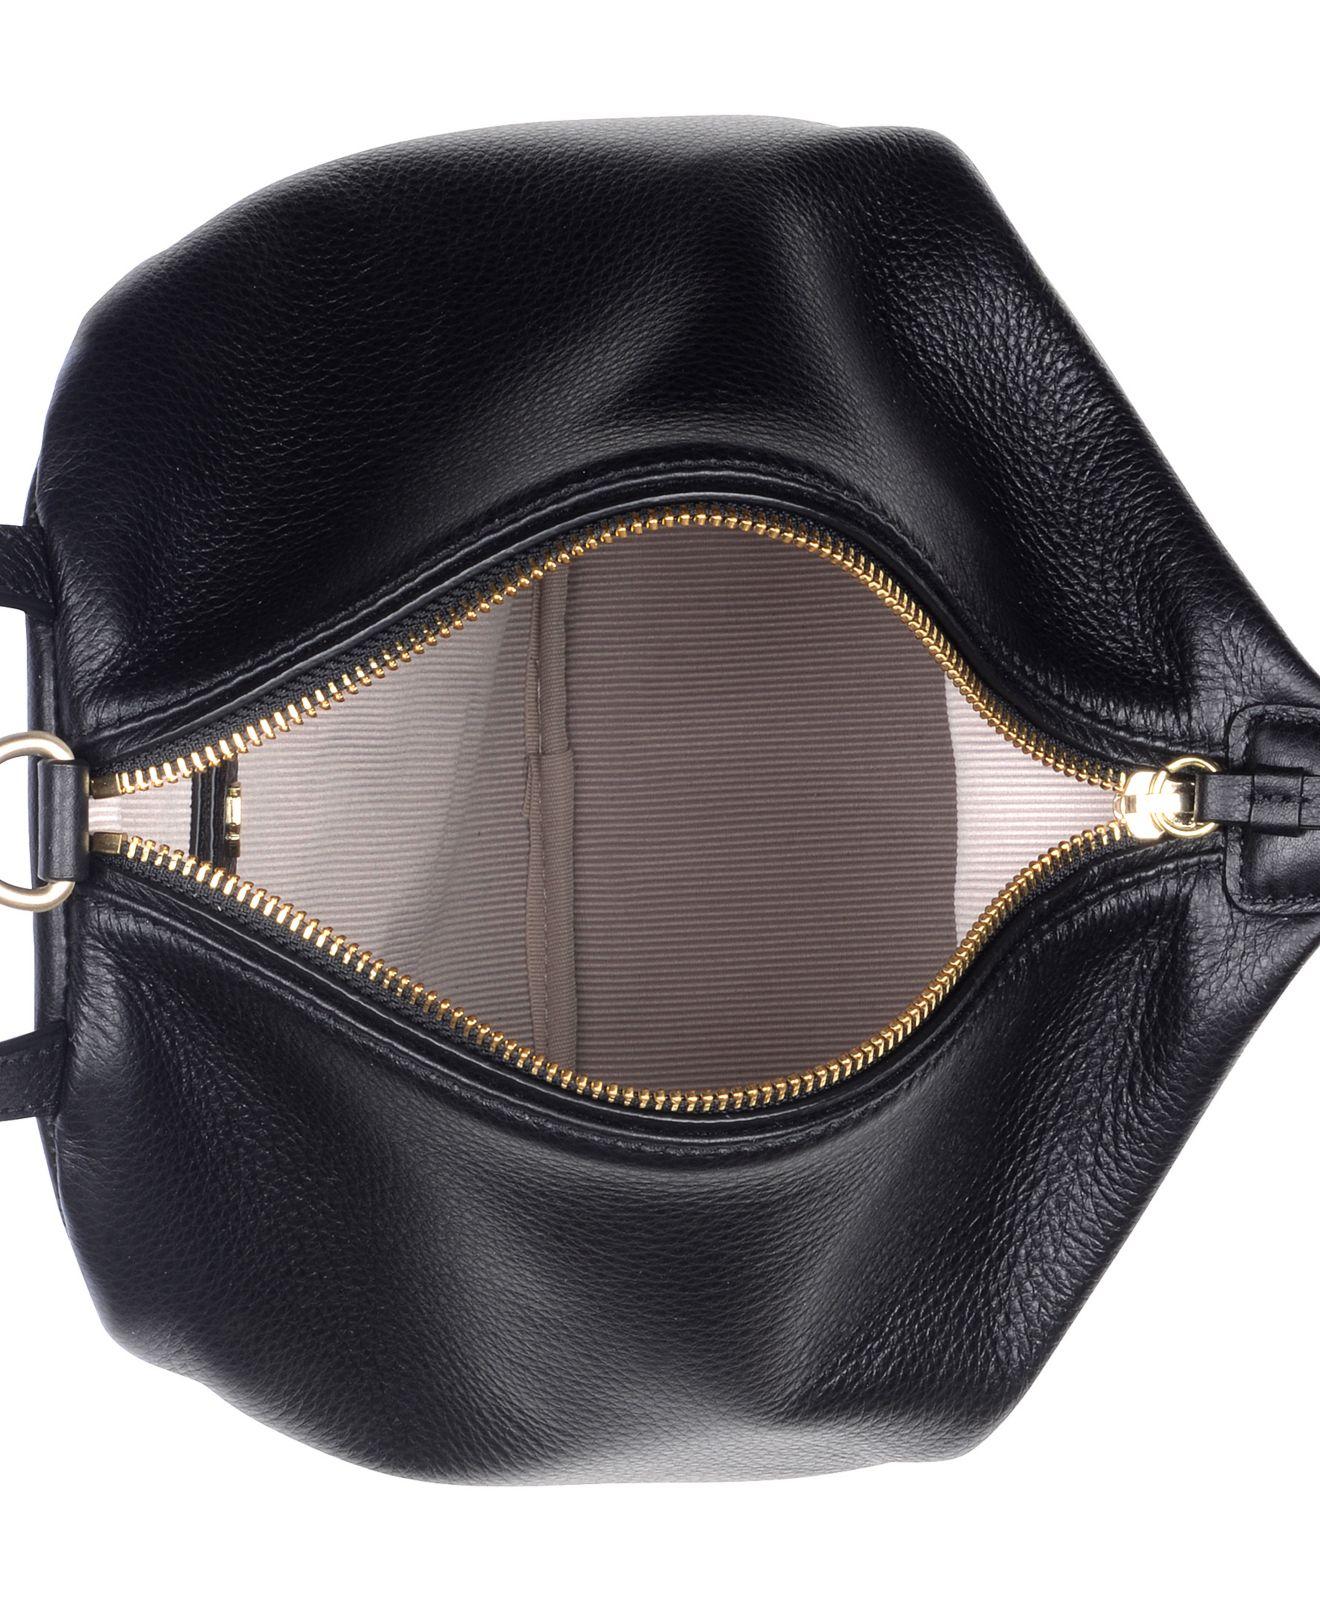 Radley Zip Top Leather Backpack in Black/Gold (Black) - Lyst